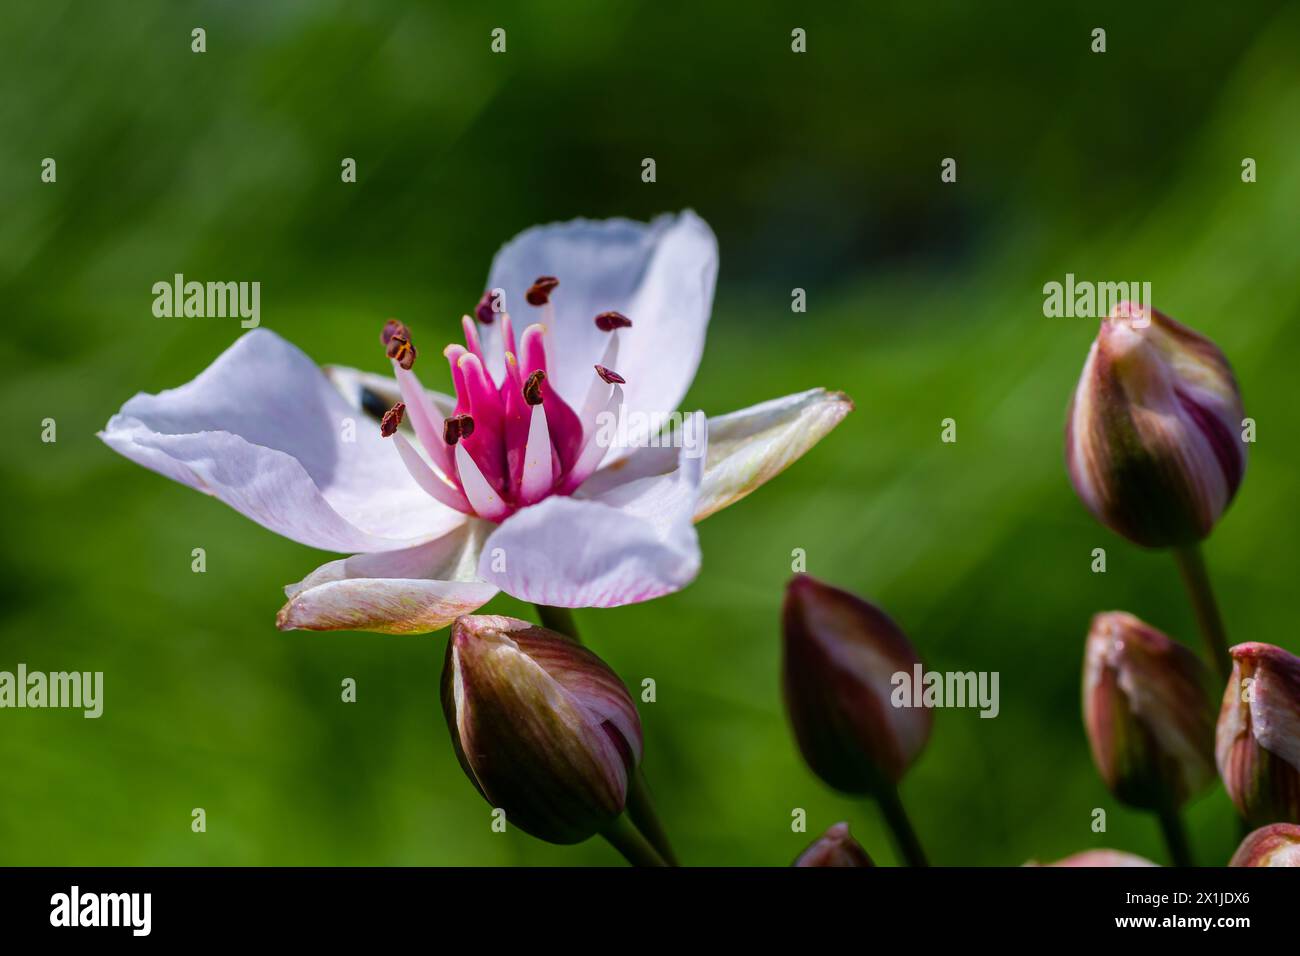 Butomus umbellatus, Flowering Rush. Wild plant shot in summer Stock Photo